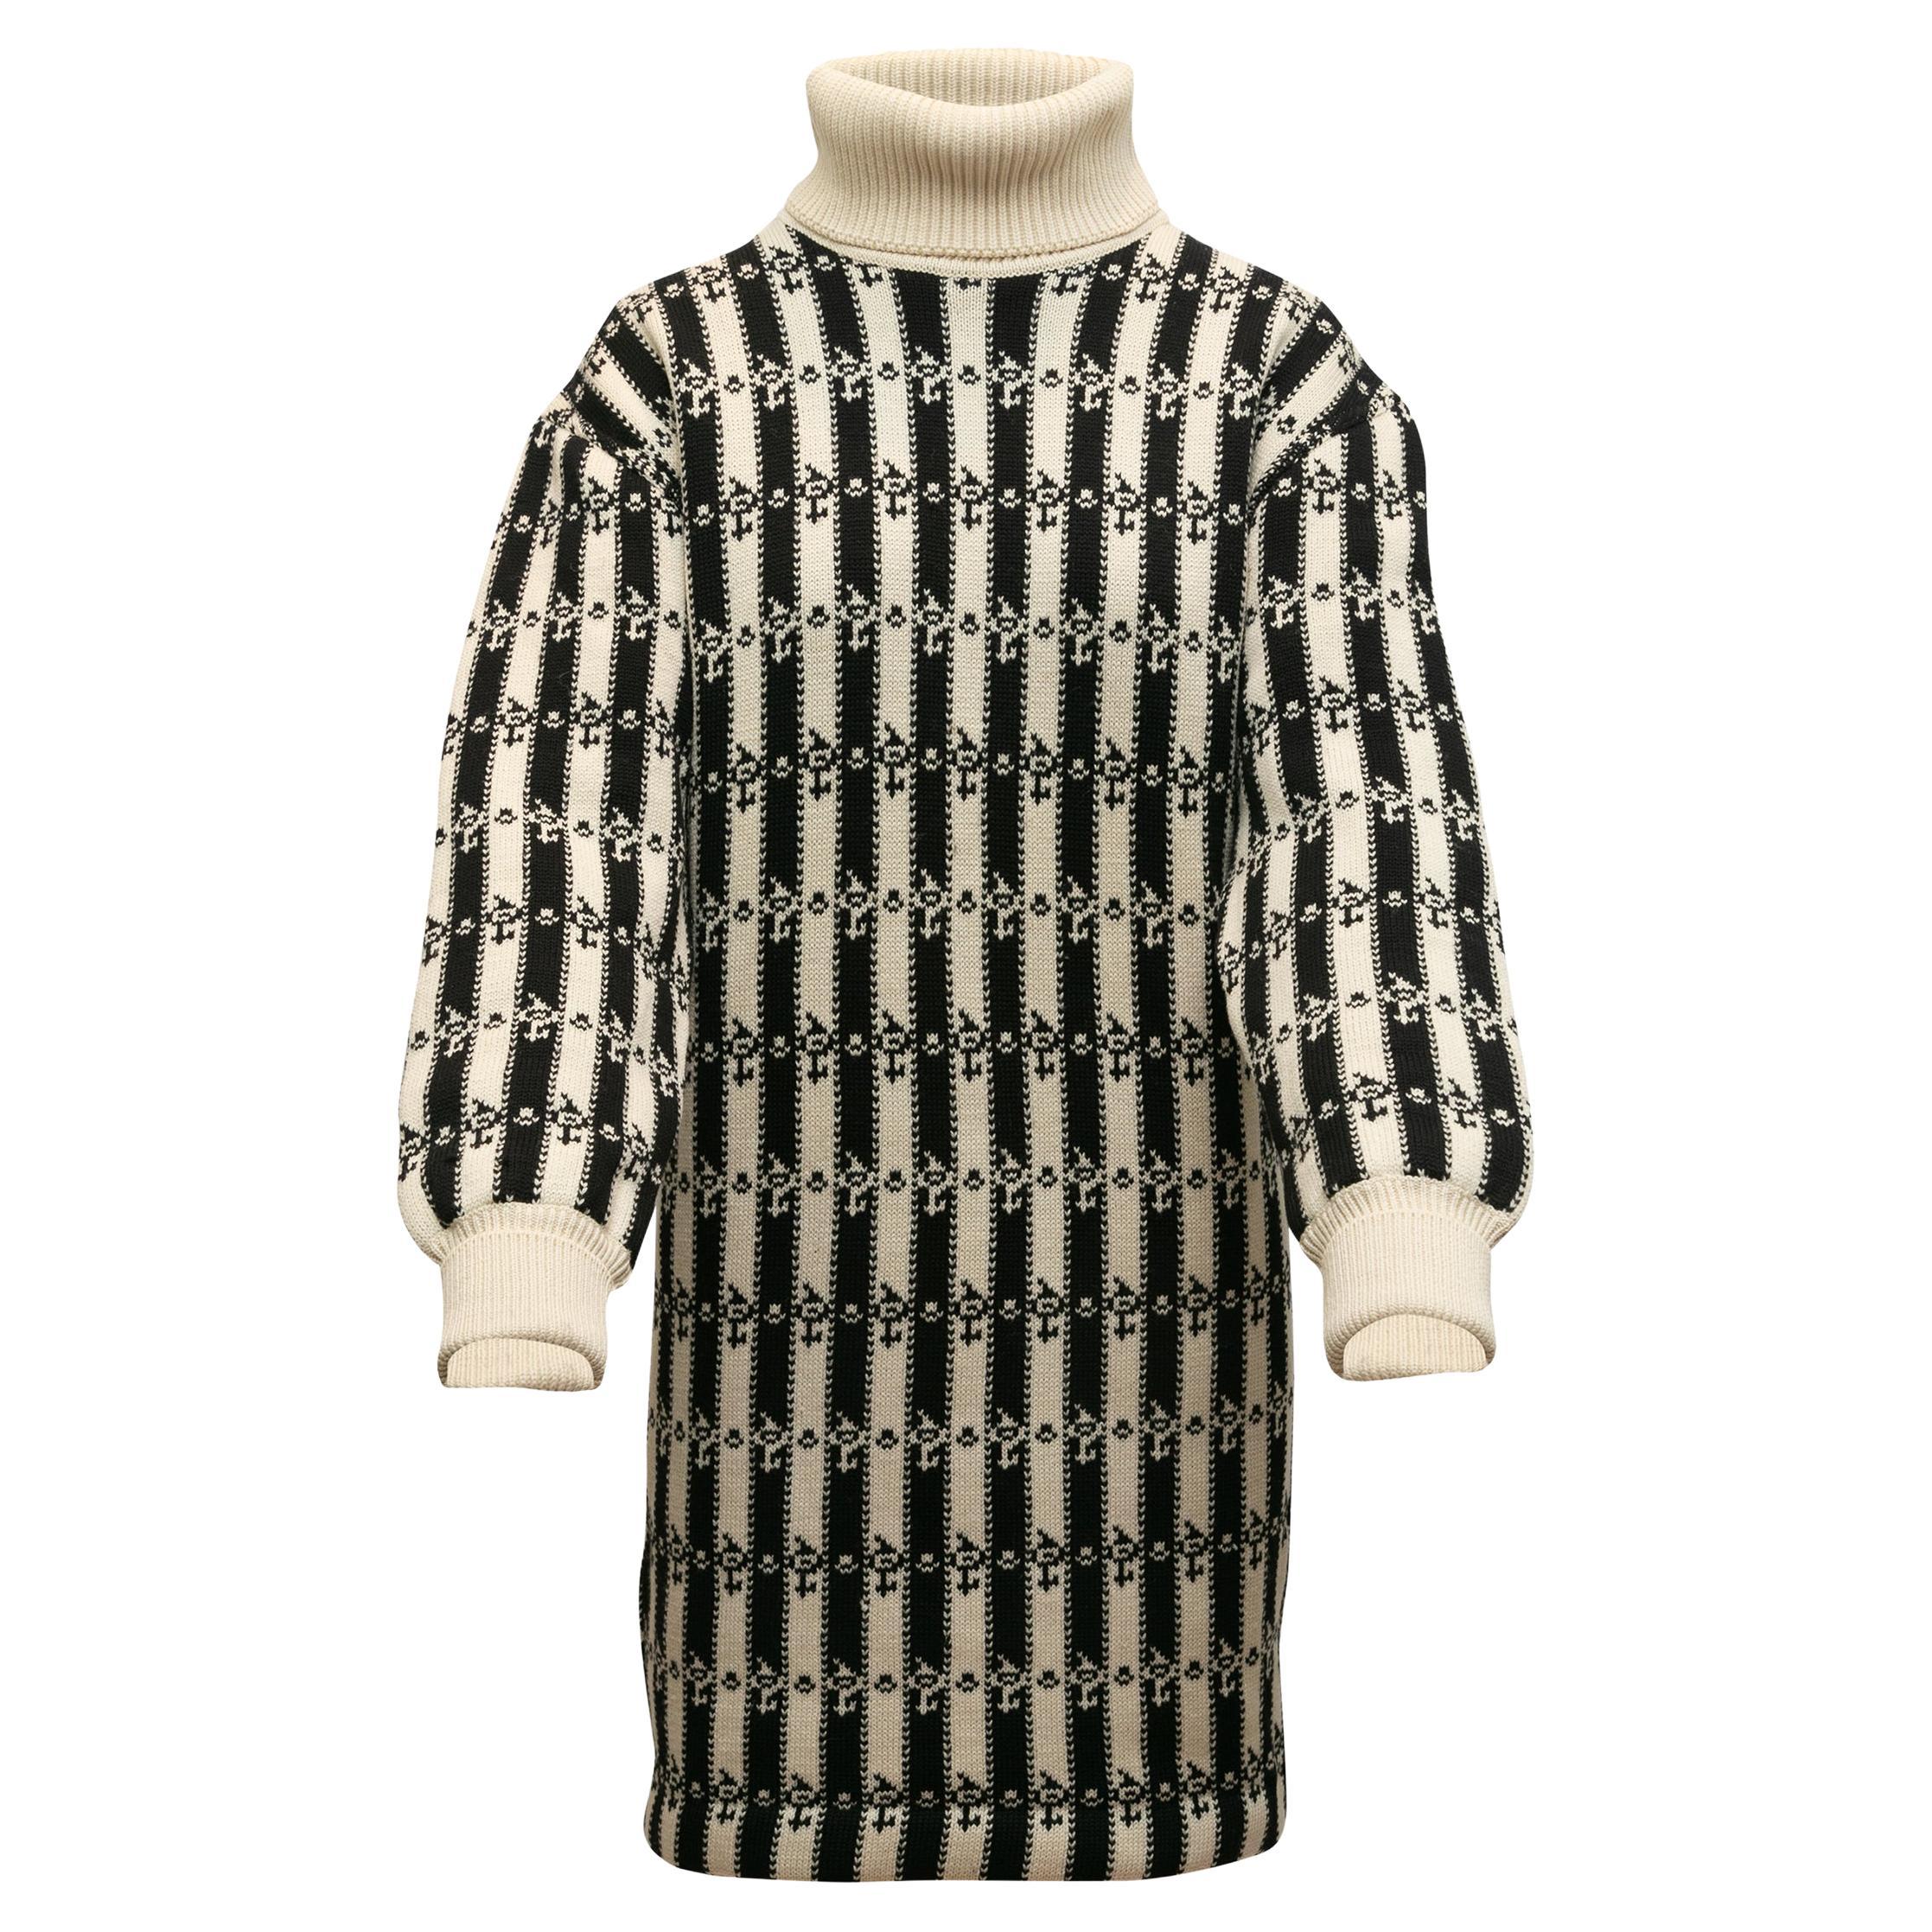 Chanel White & Black Boutique Sweater Dress